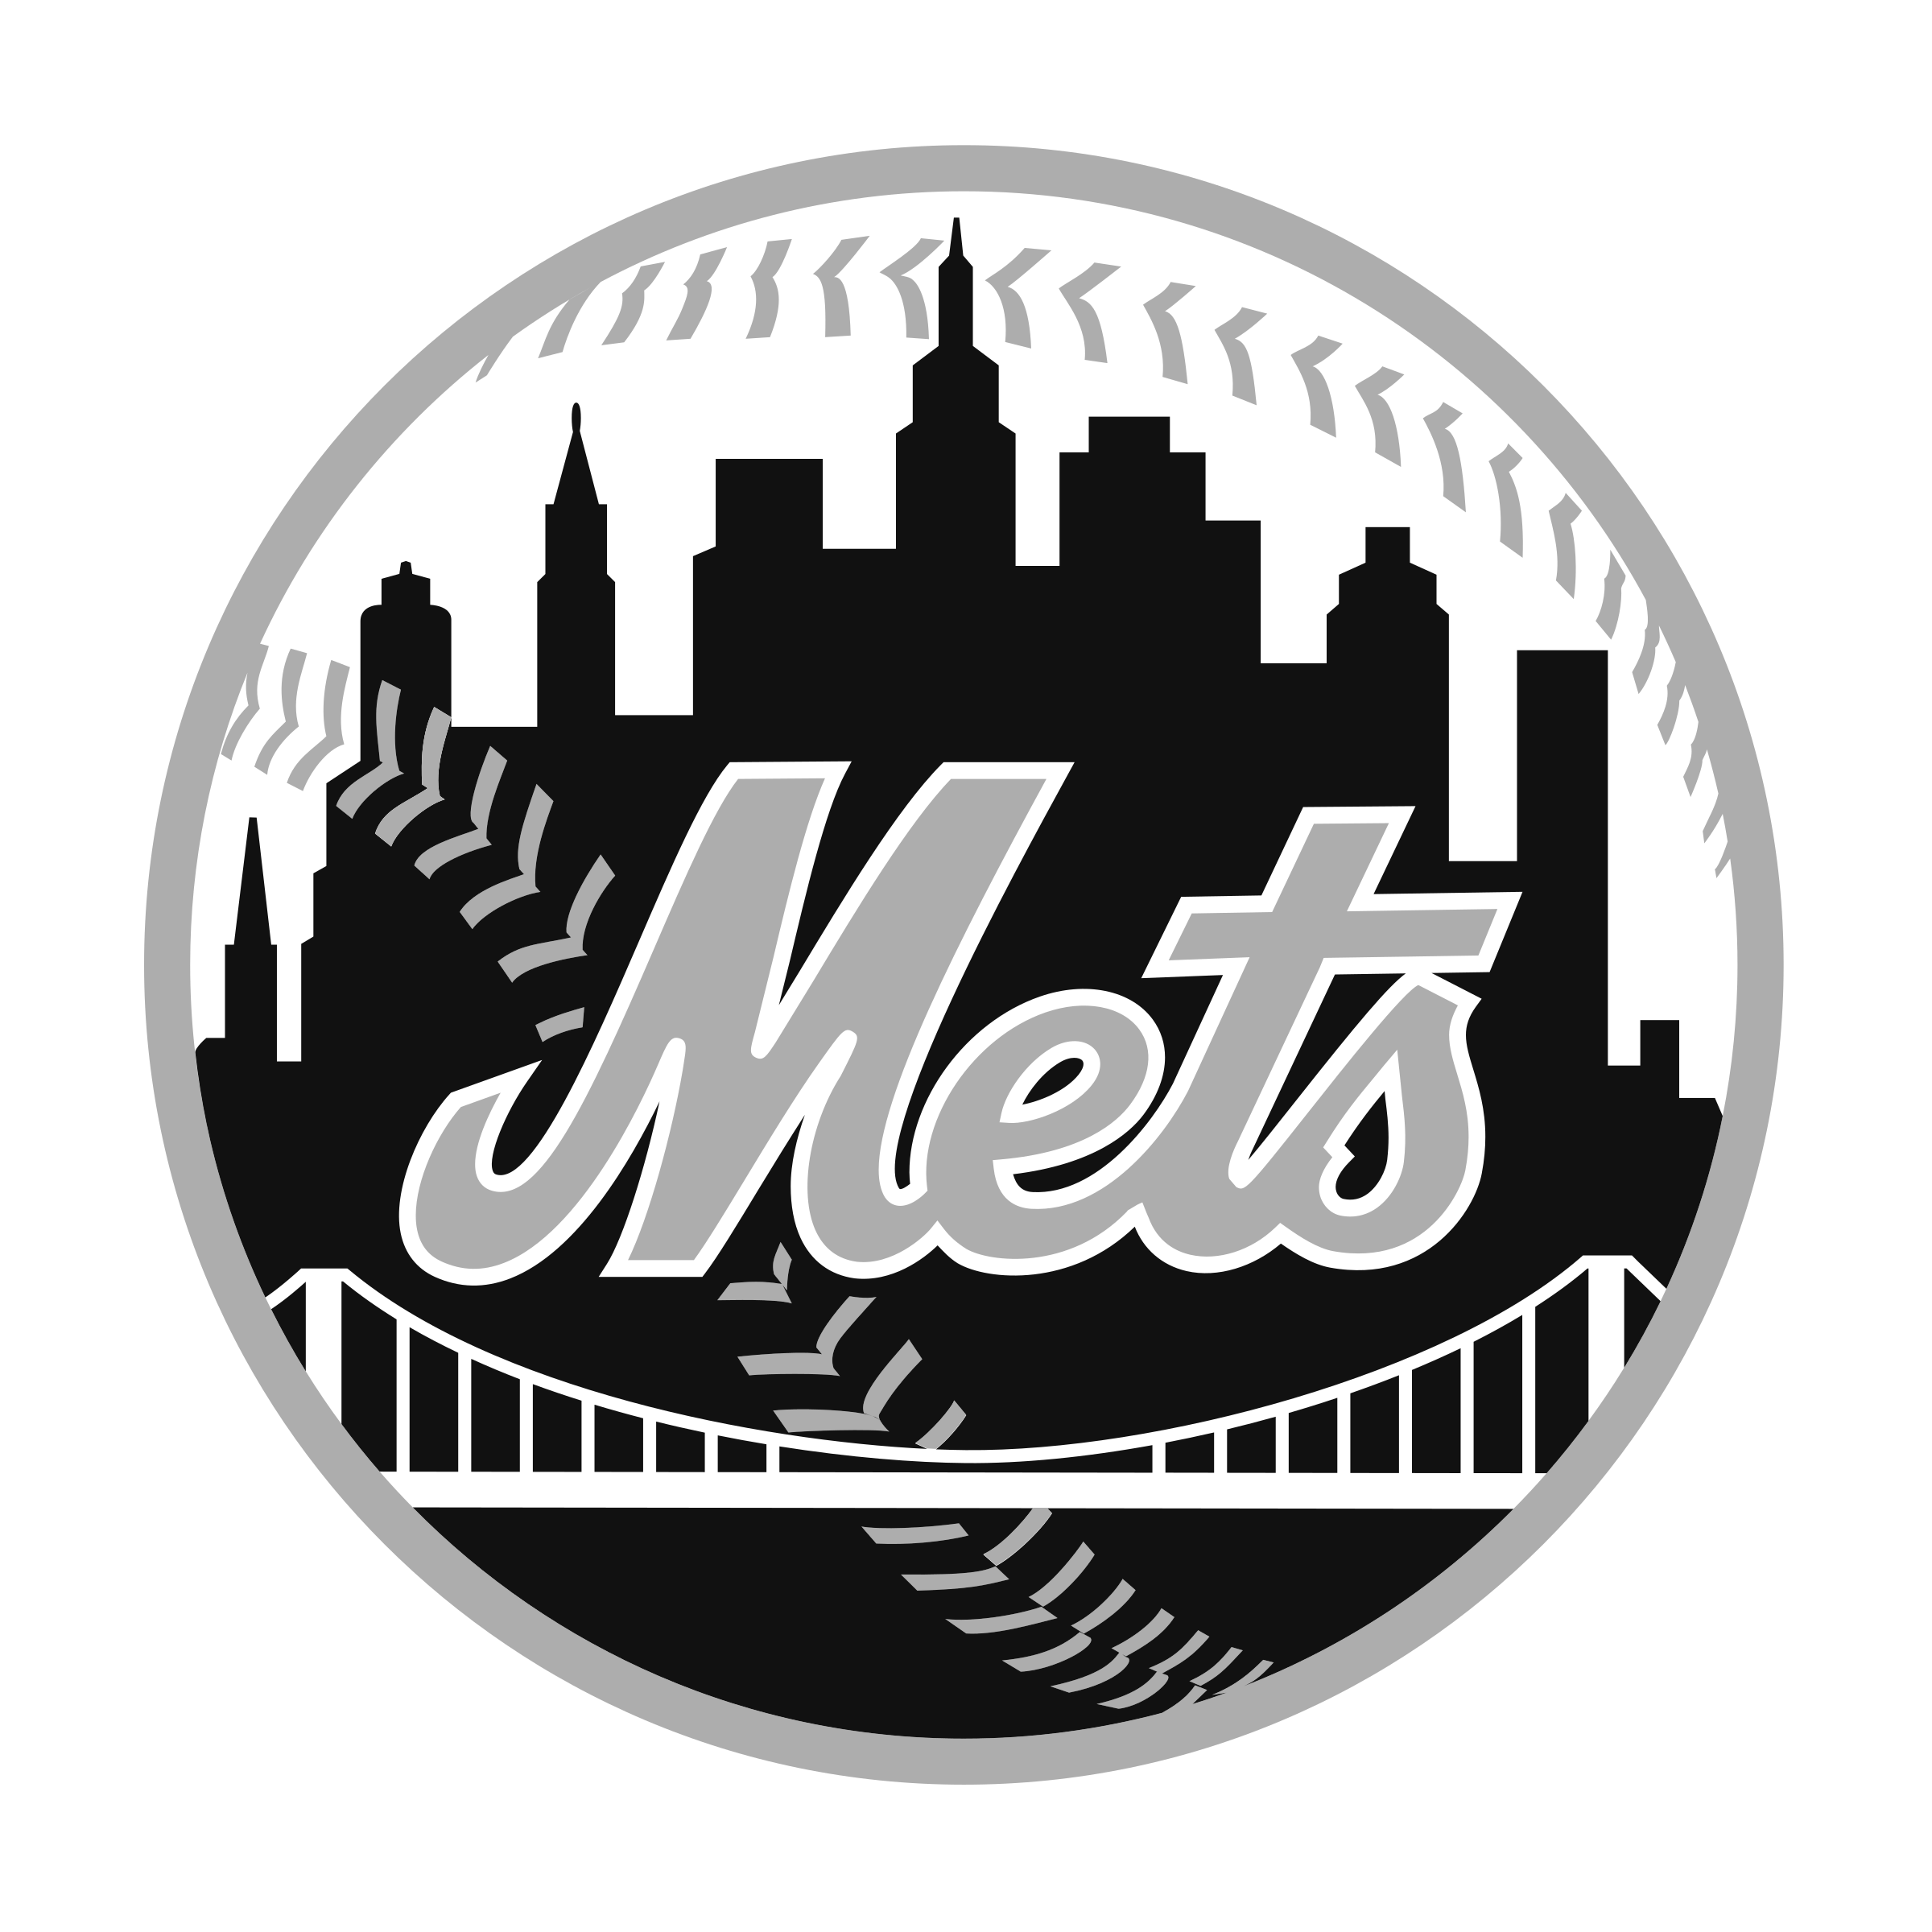 New York Mets Logo - New York Mets Logo PNG Transparent & SVG Vector - Freebie Supply